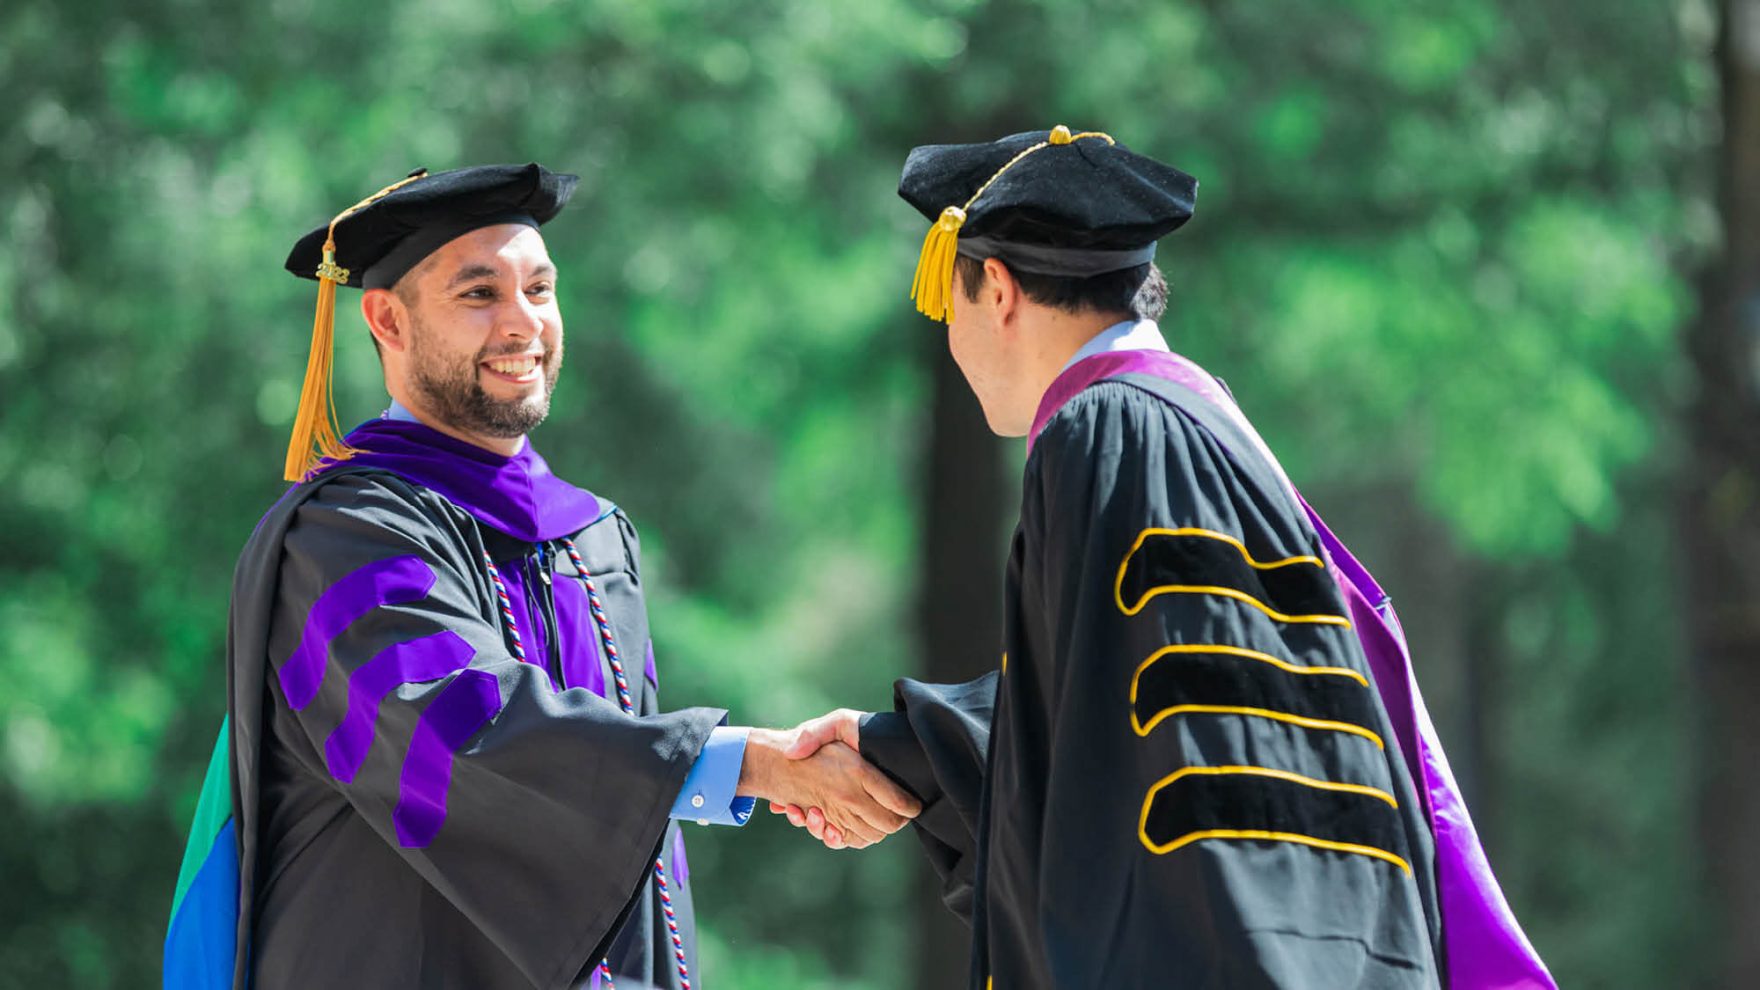 A graduate being congratulated during commencement at Regent University Virginia Beach VA 23464.